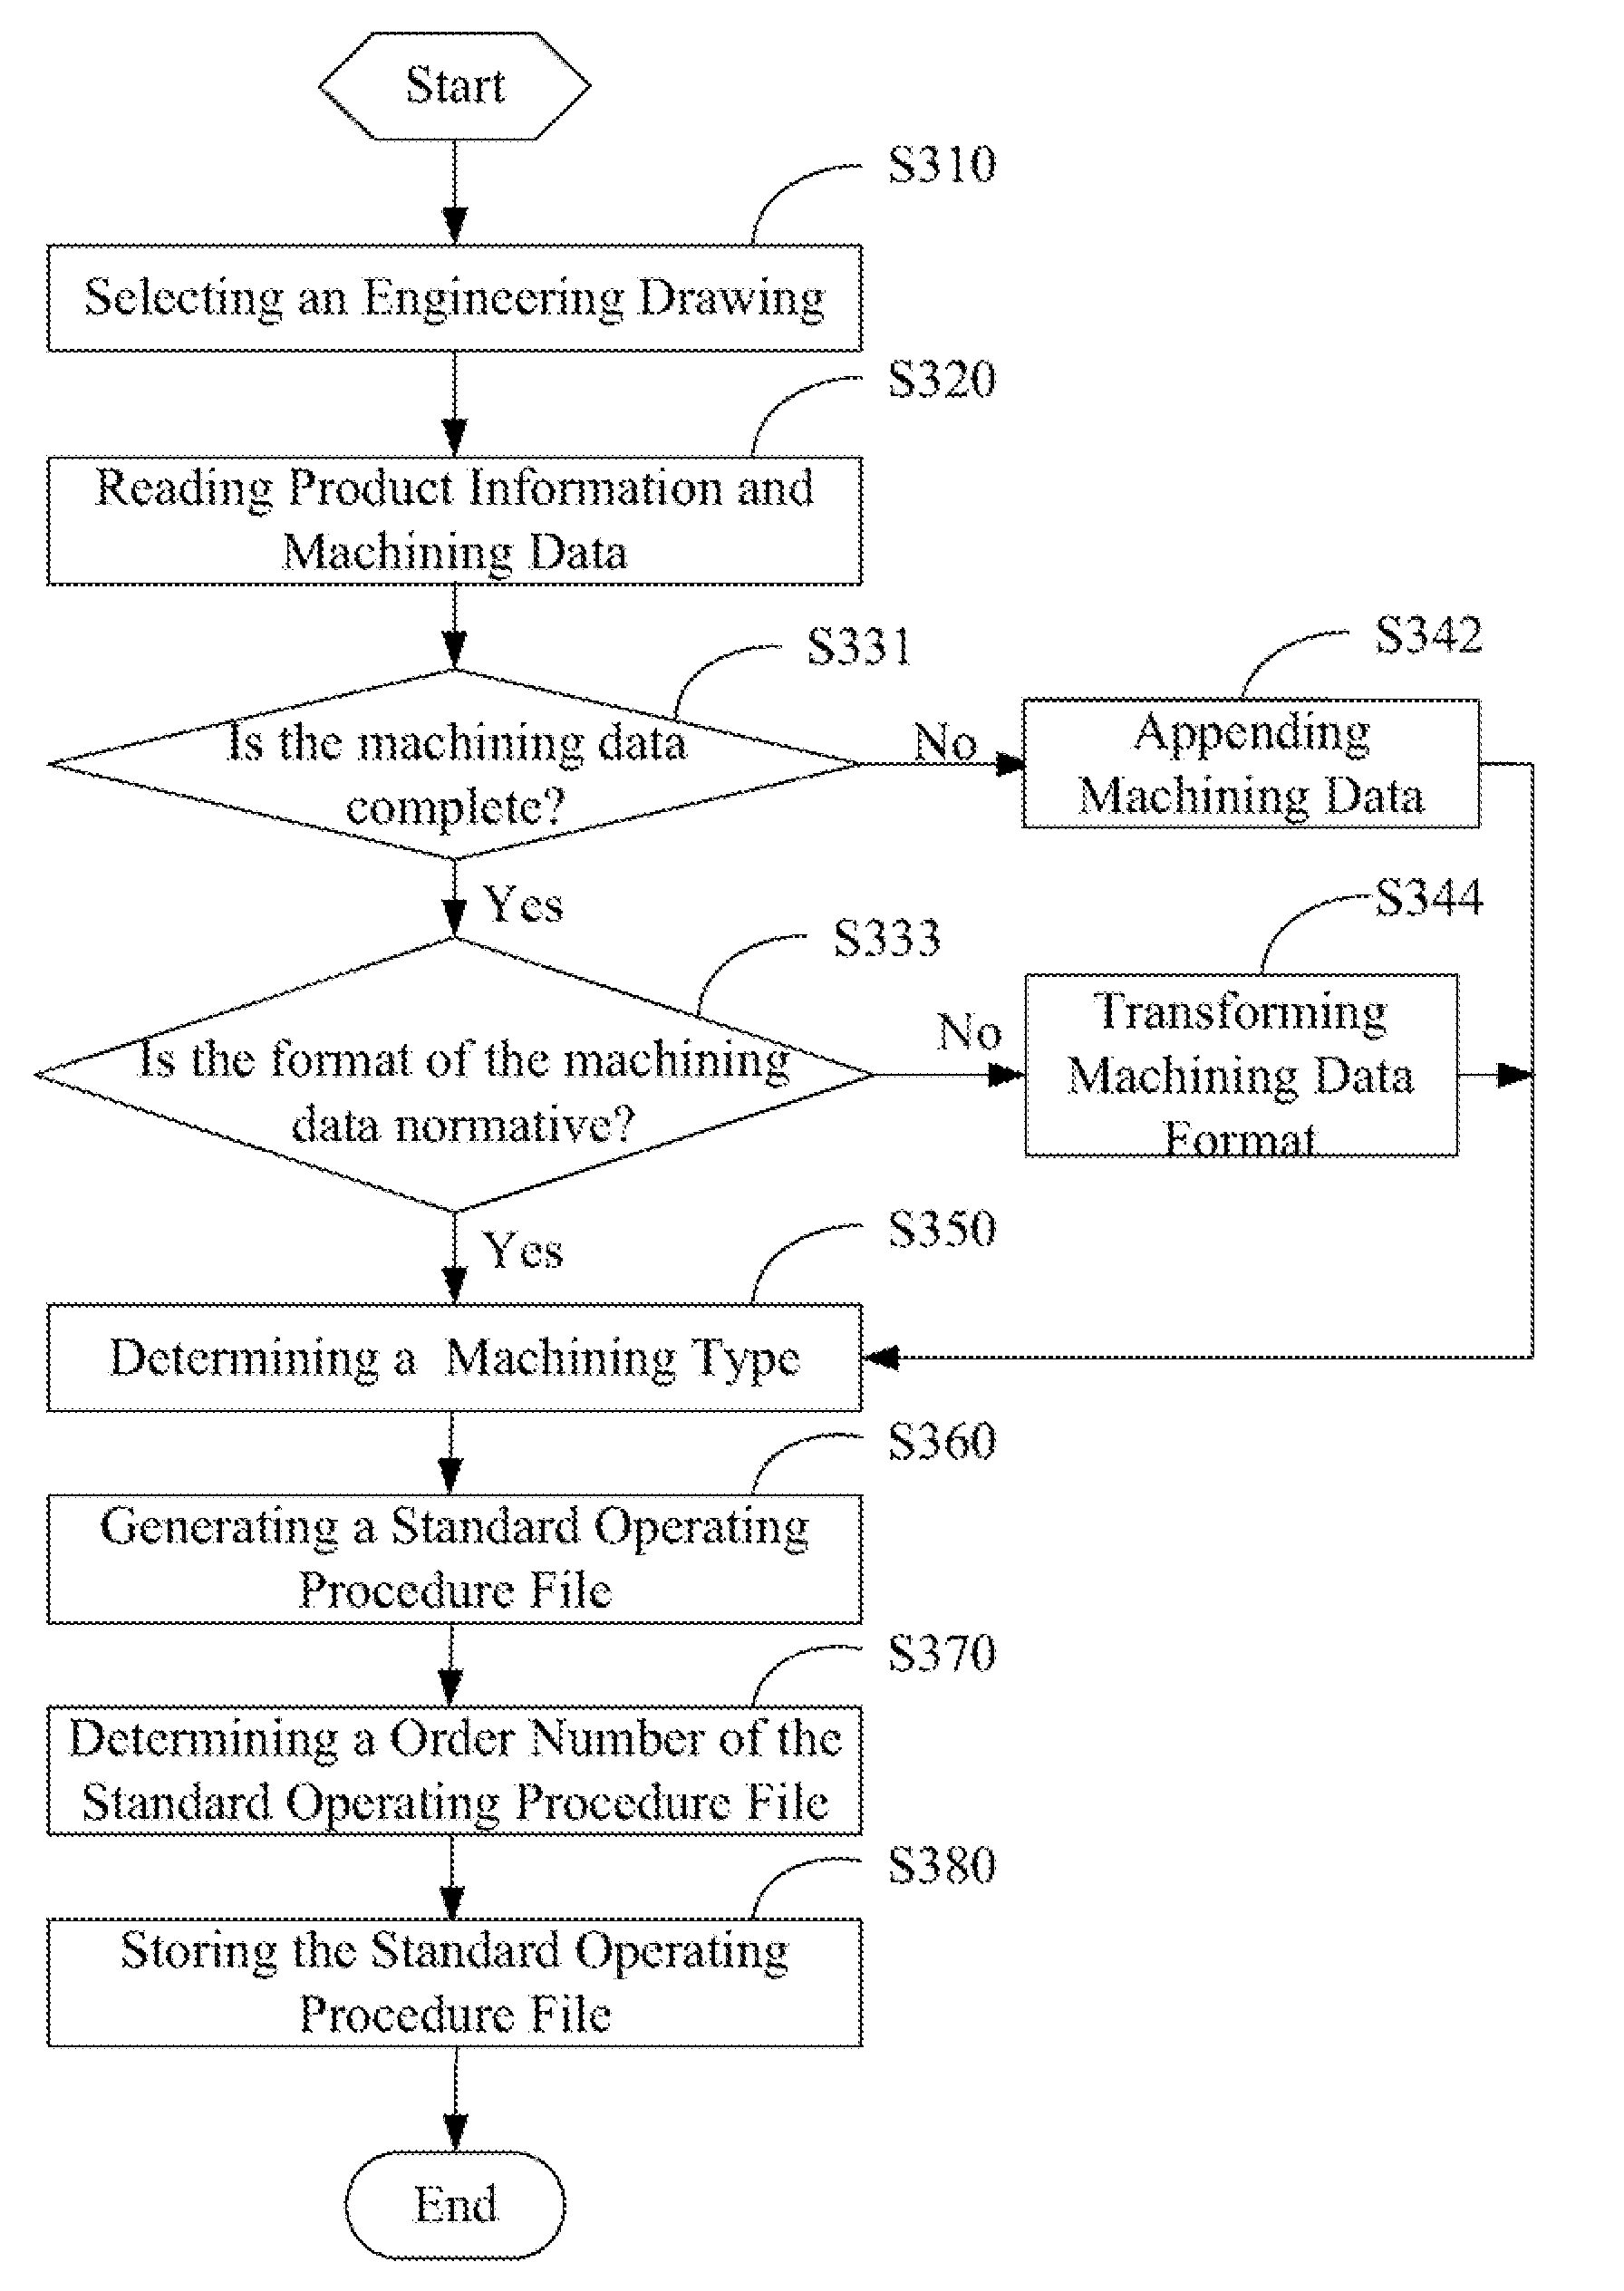 System for generating standard operating procedure(SOP) files